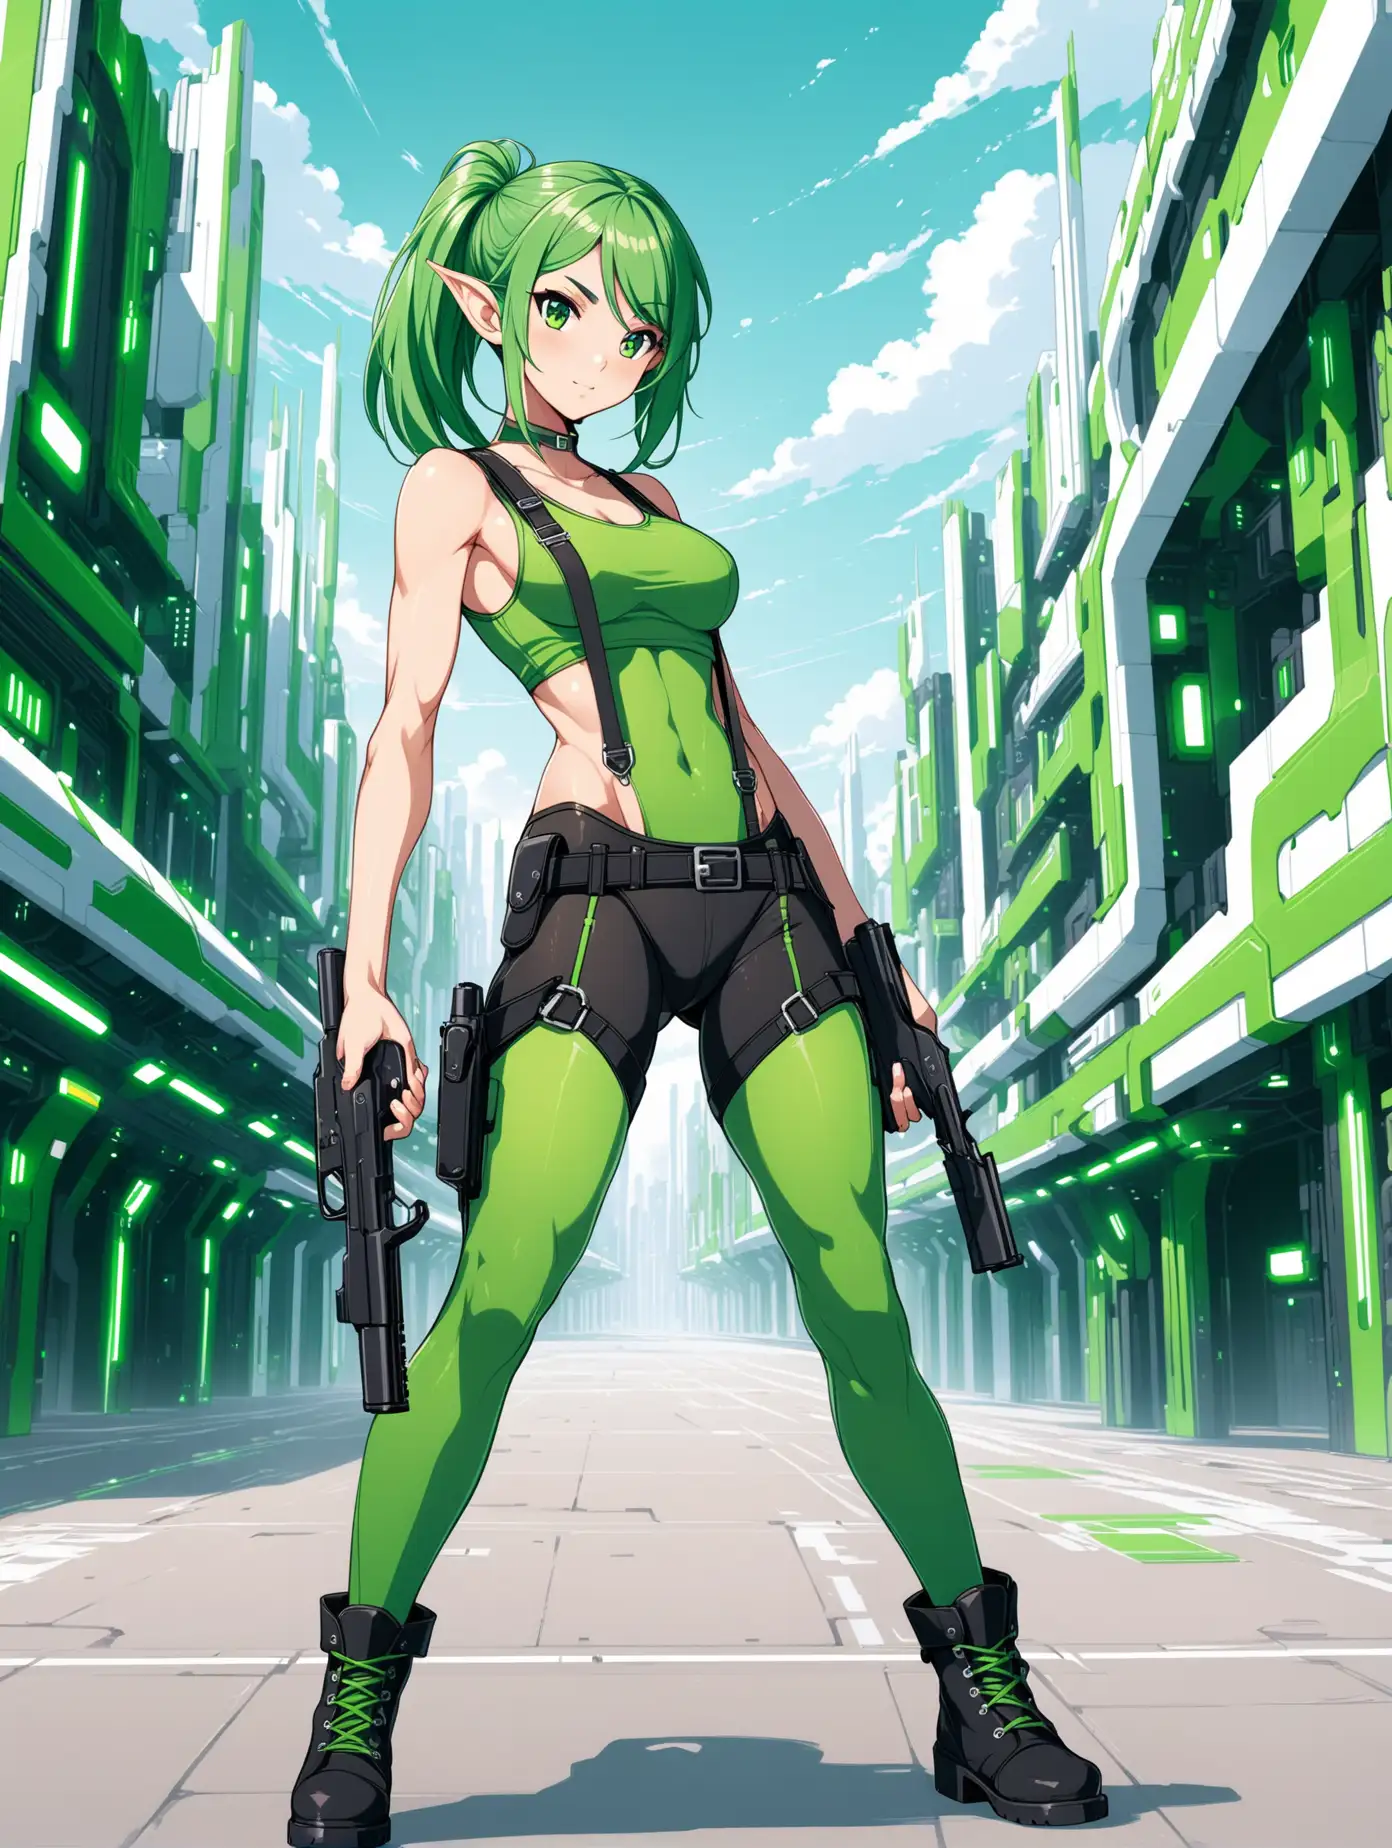 Futuristic Heroine with Green Hair and Handguns in Urban Landscape